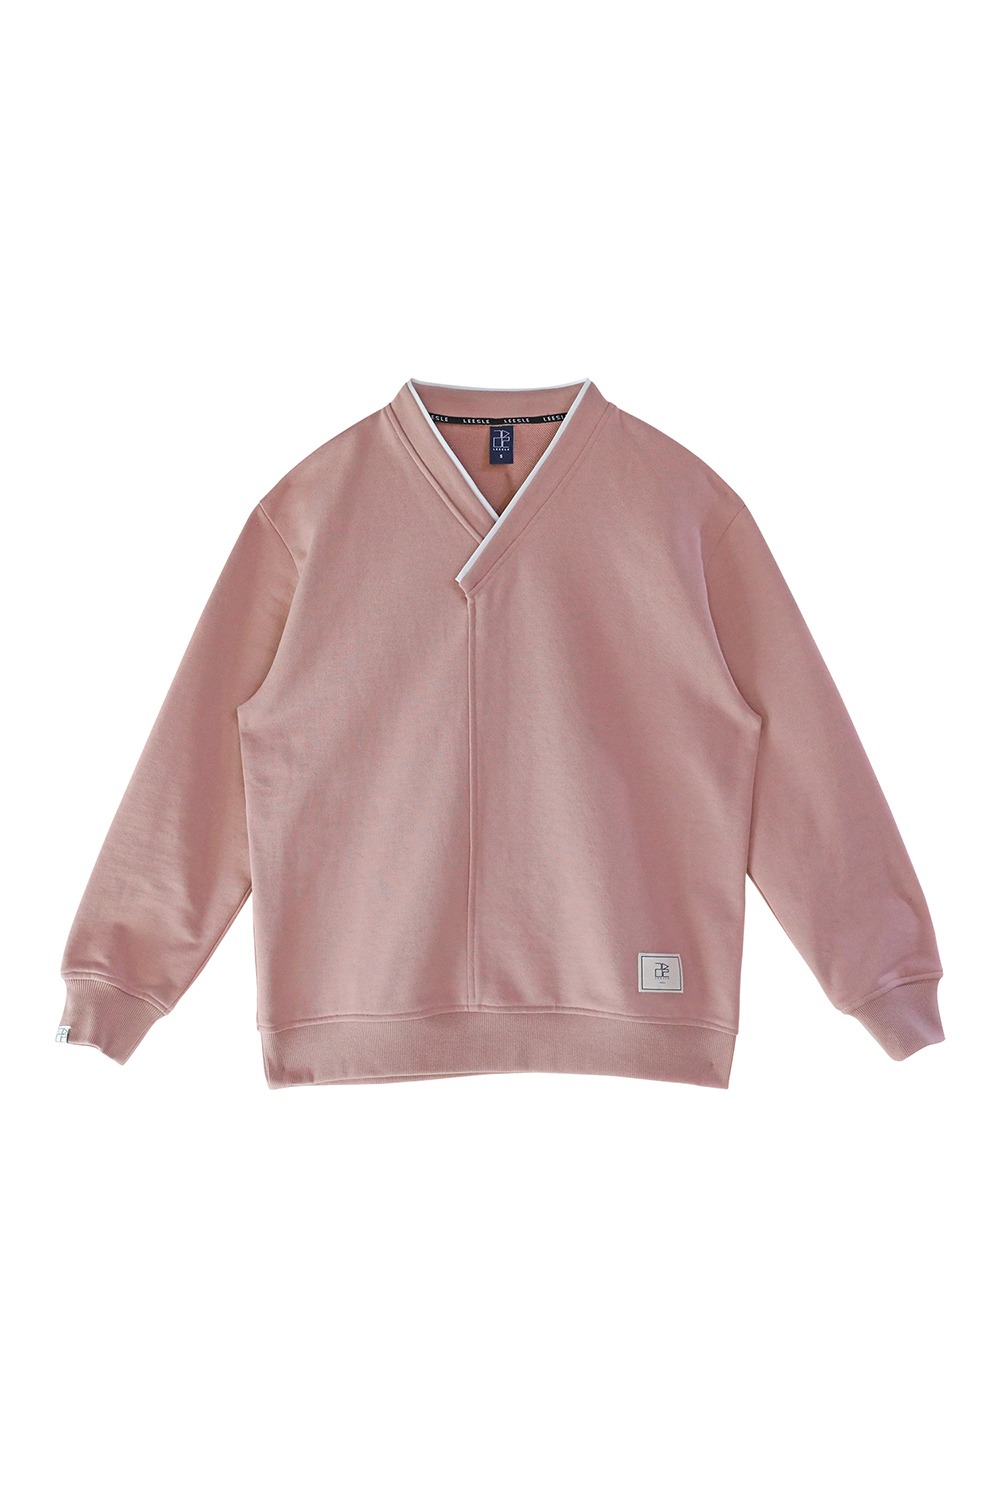 Basic Hanbok Sweatshirt [Pink]